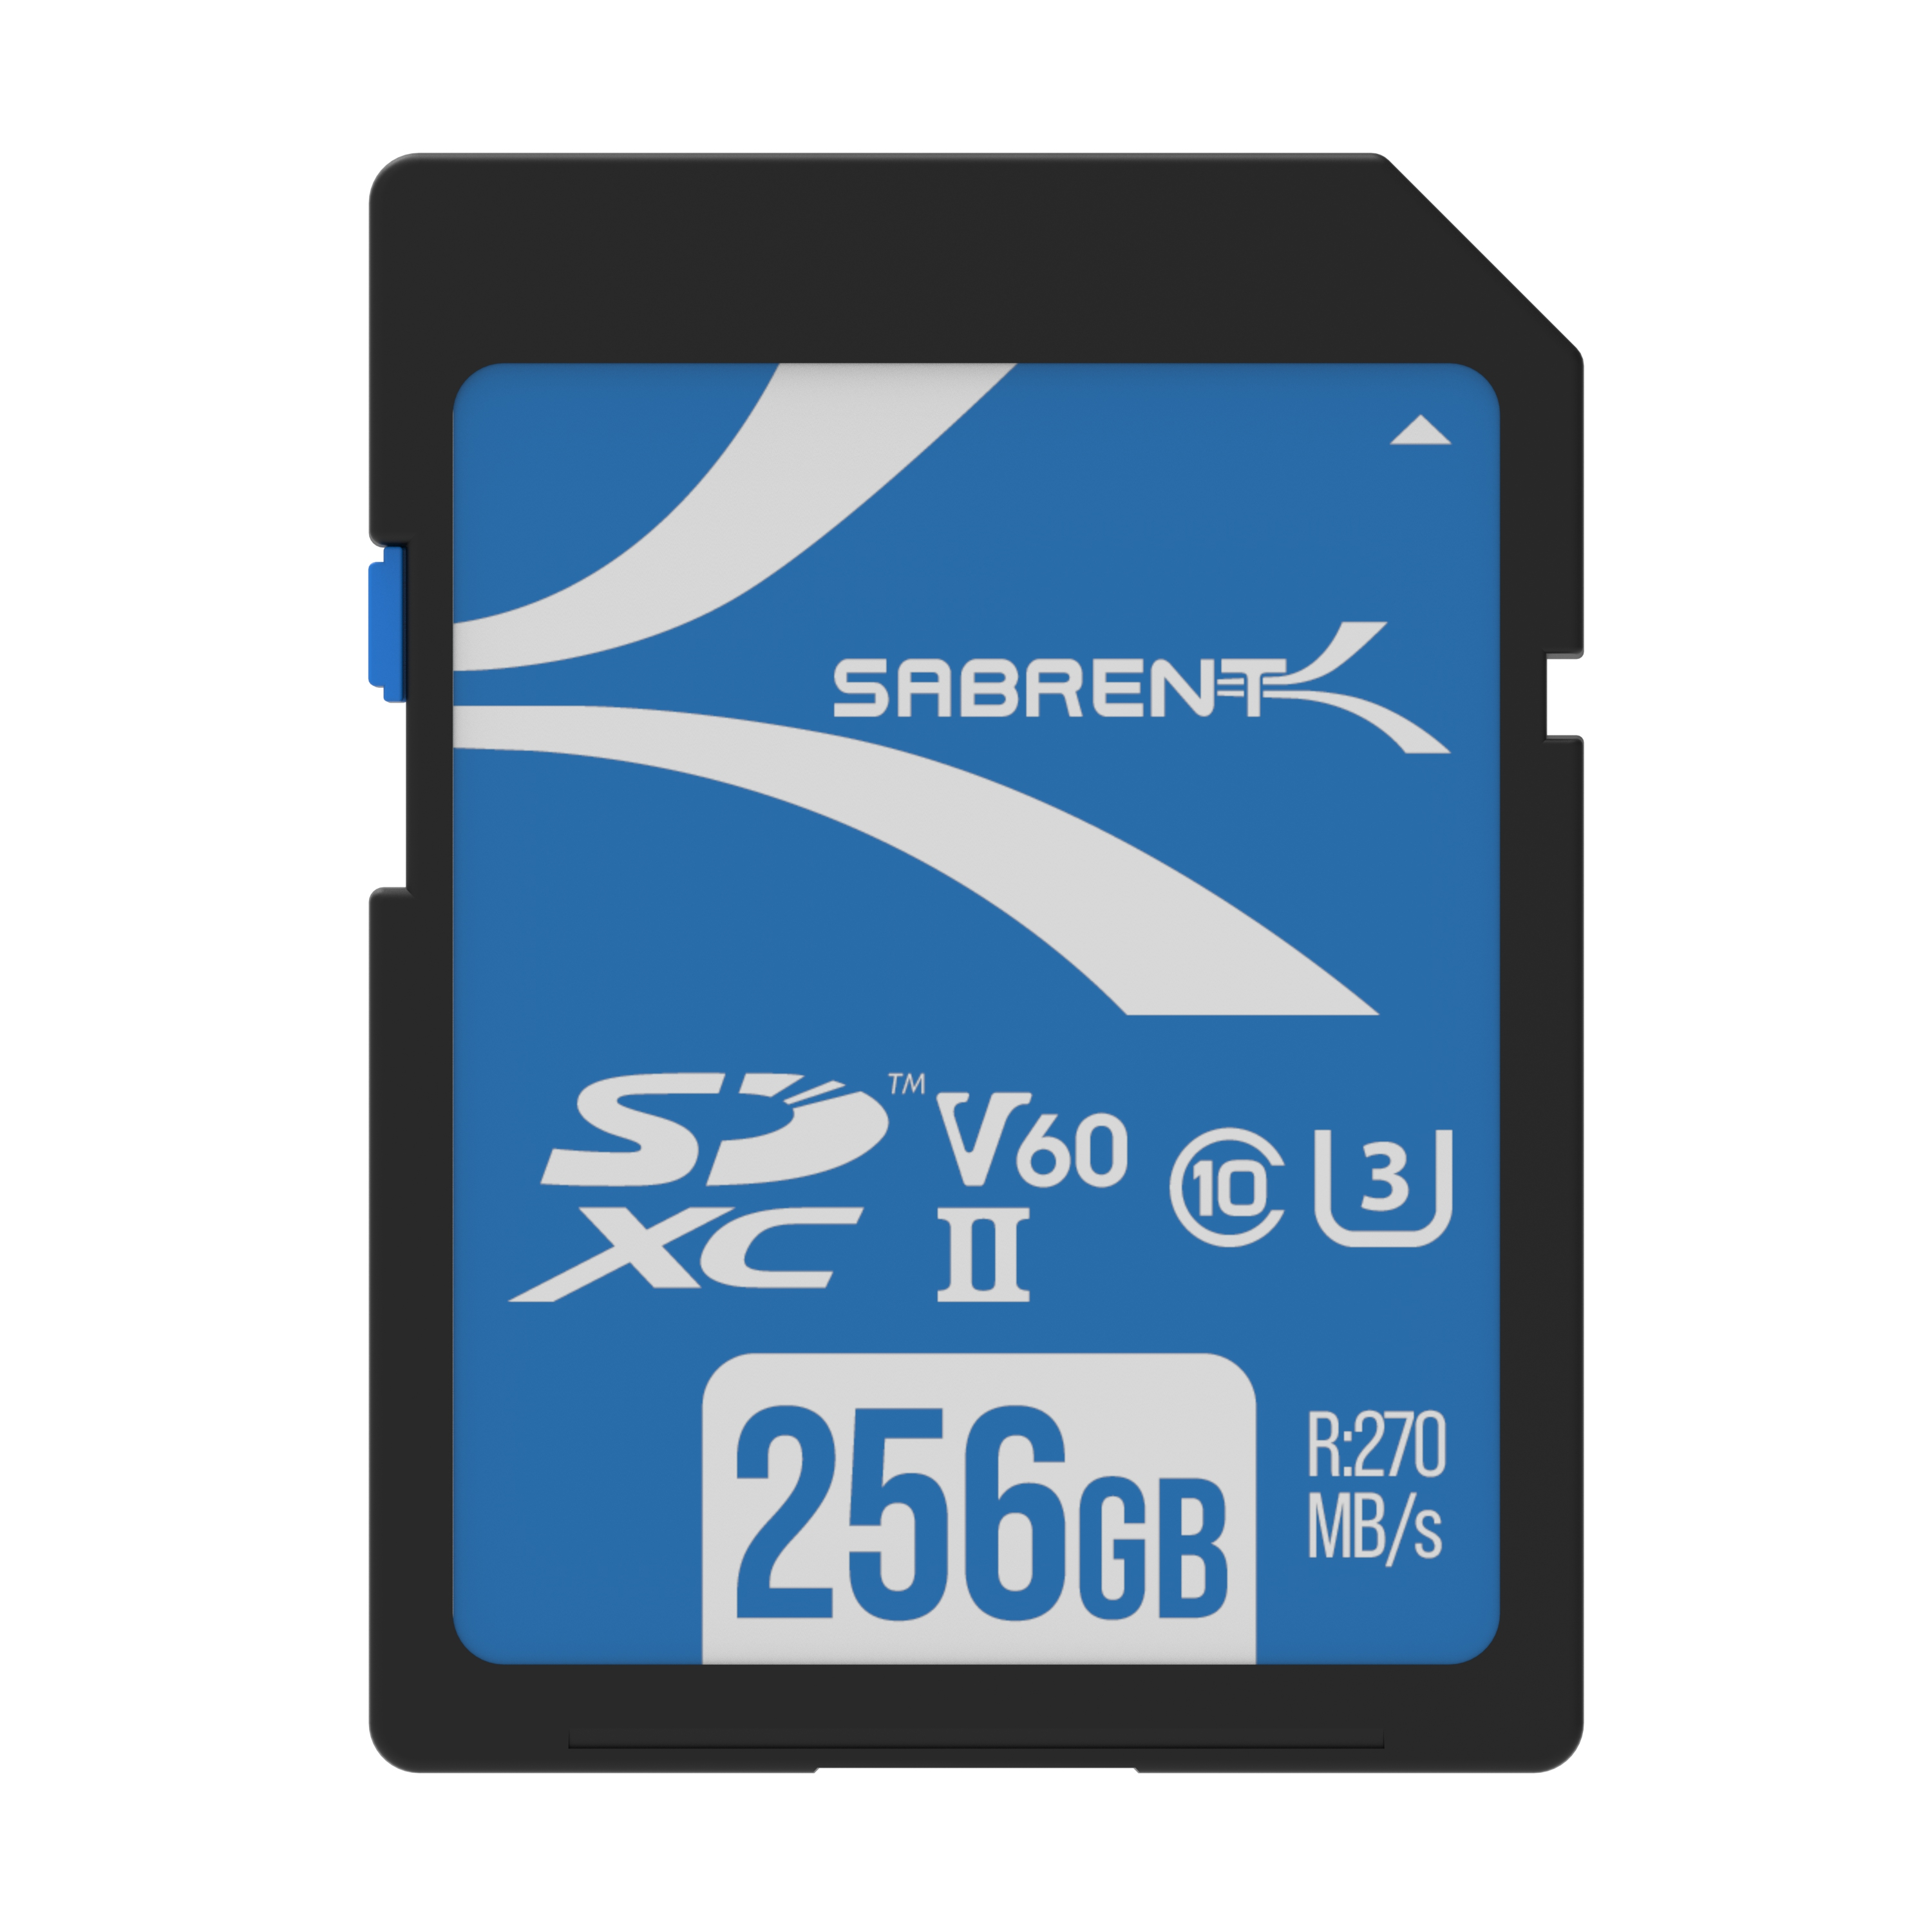 SABRENT V60 256GB SD SDXC UHS-II, GB, MB/s 256 SD 270 Karte